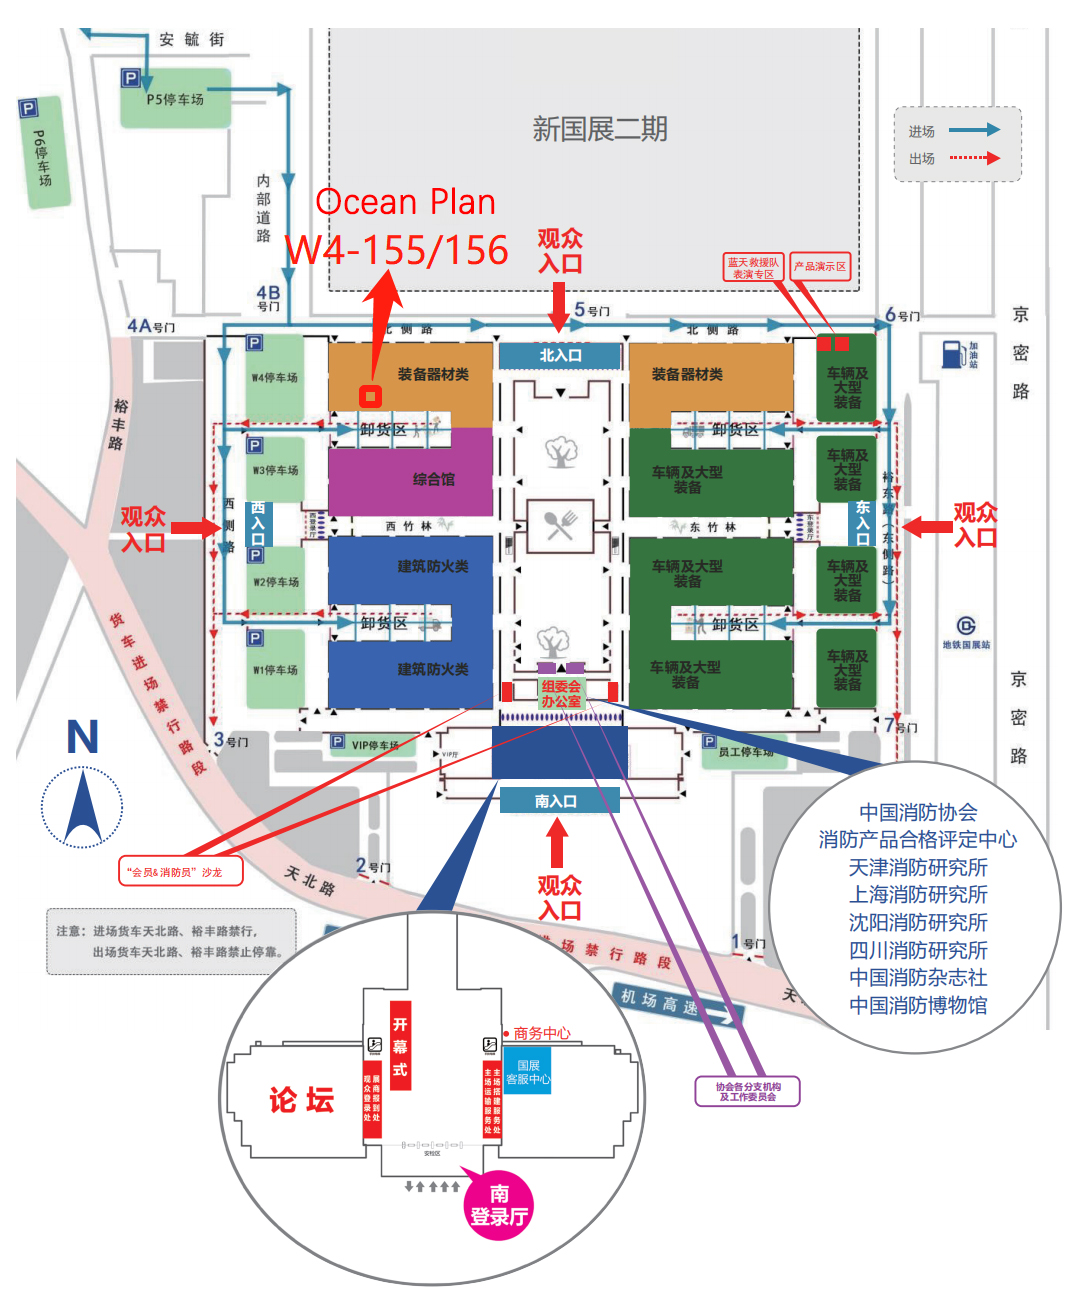 China Fire Expo 2023 - Ocean Plan exhibition invitation 